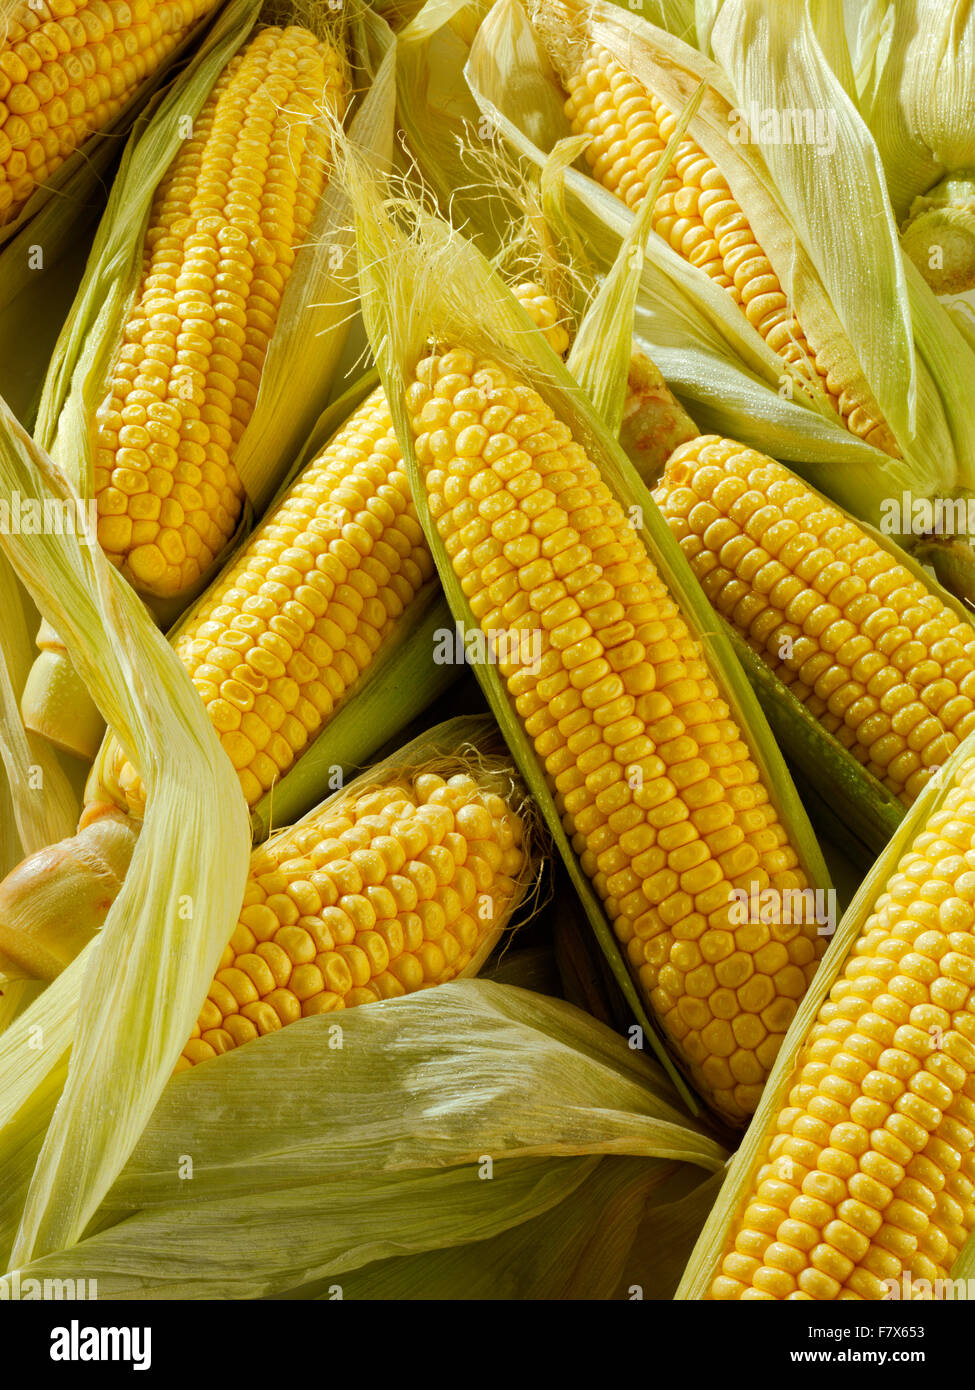 whole fresh sweet corn cobs Stock Photo